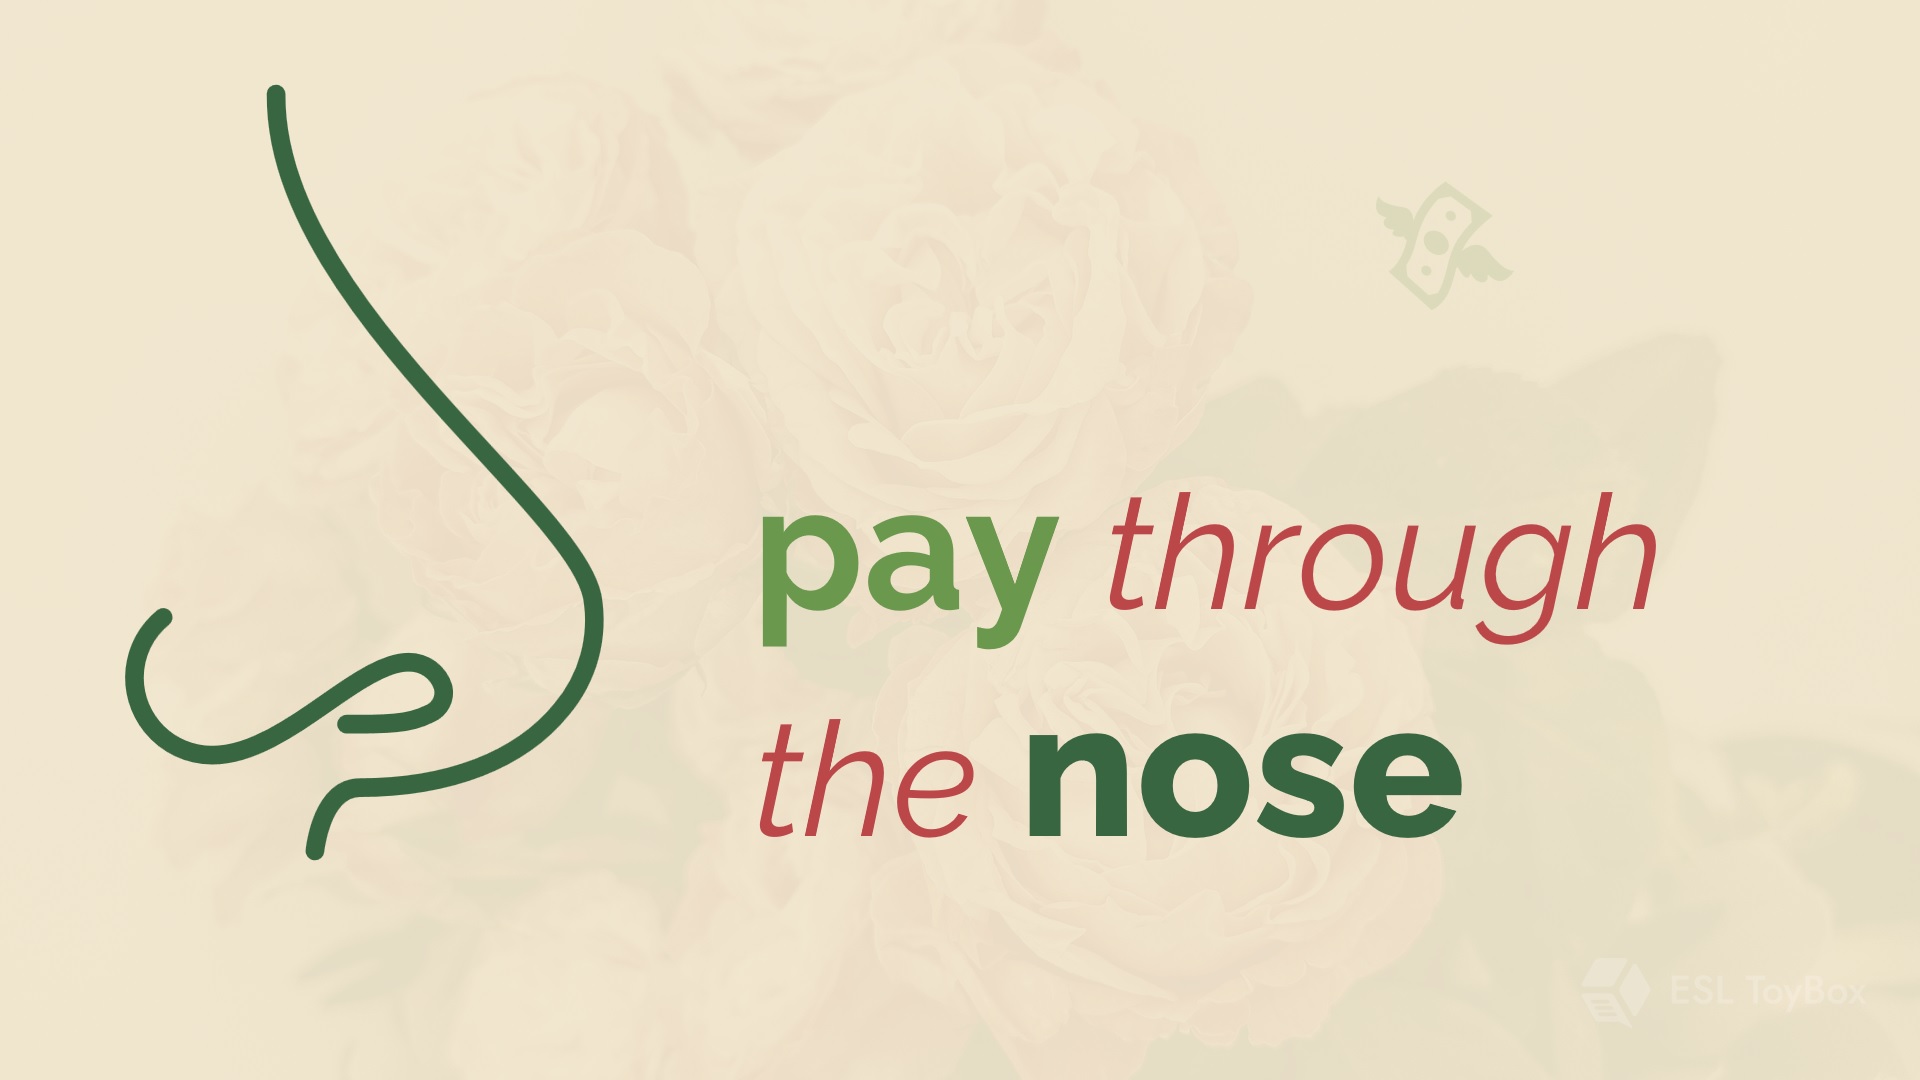 Paying Through the Nose